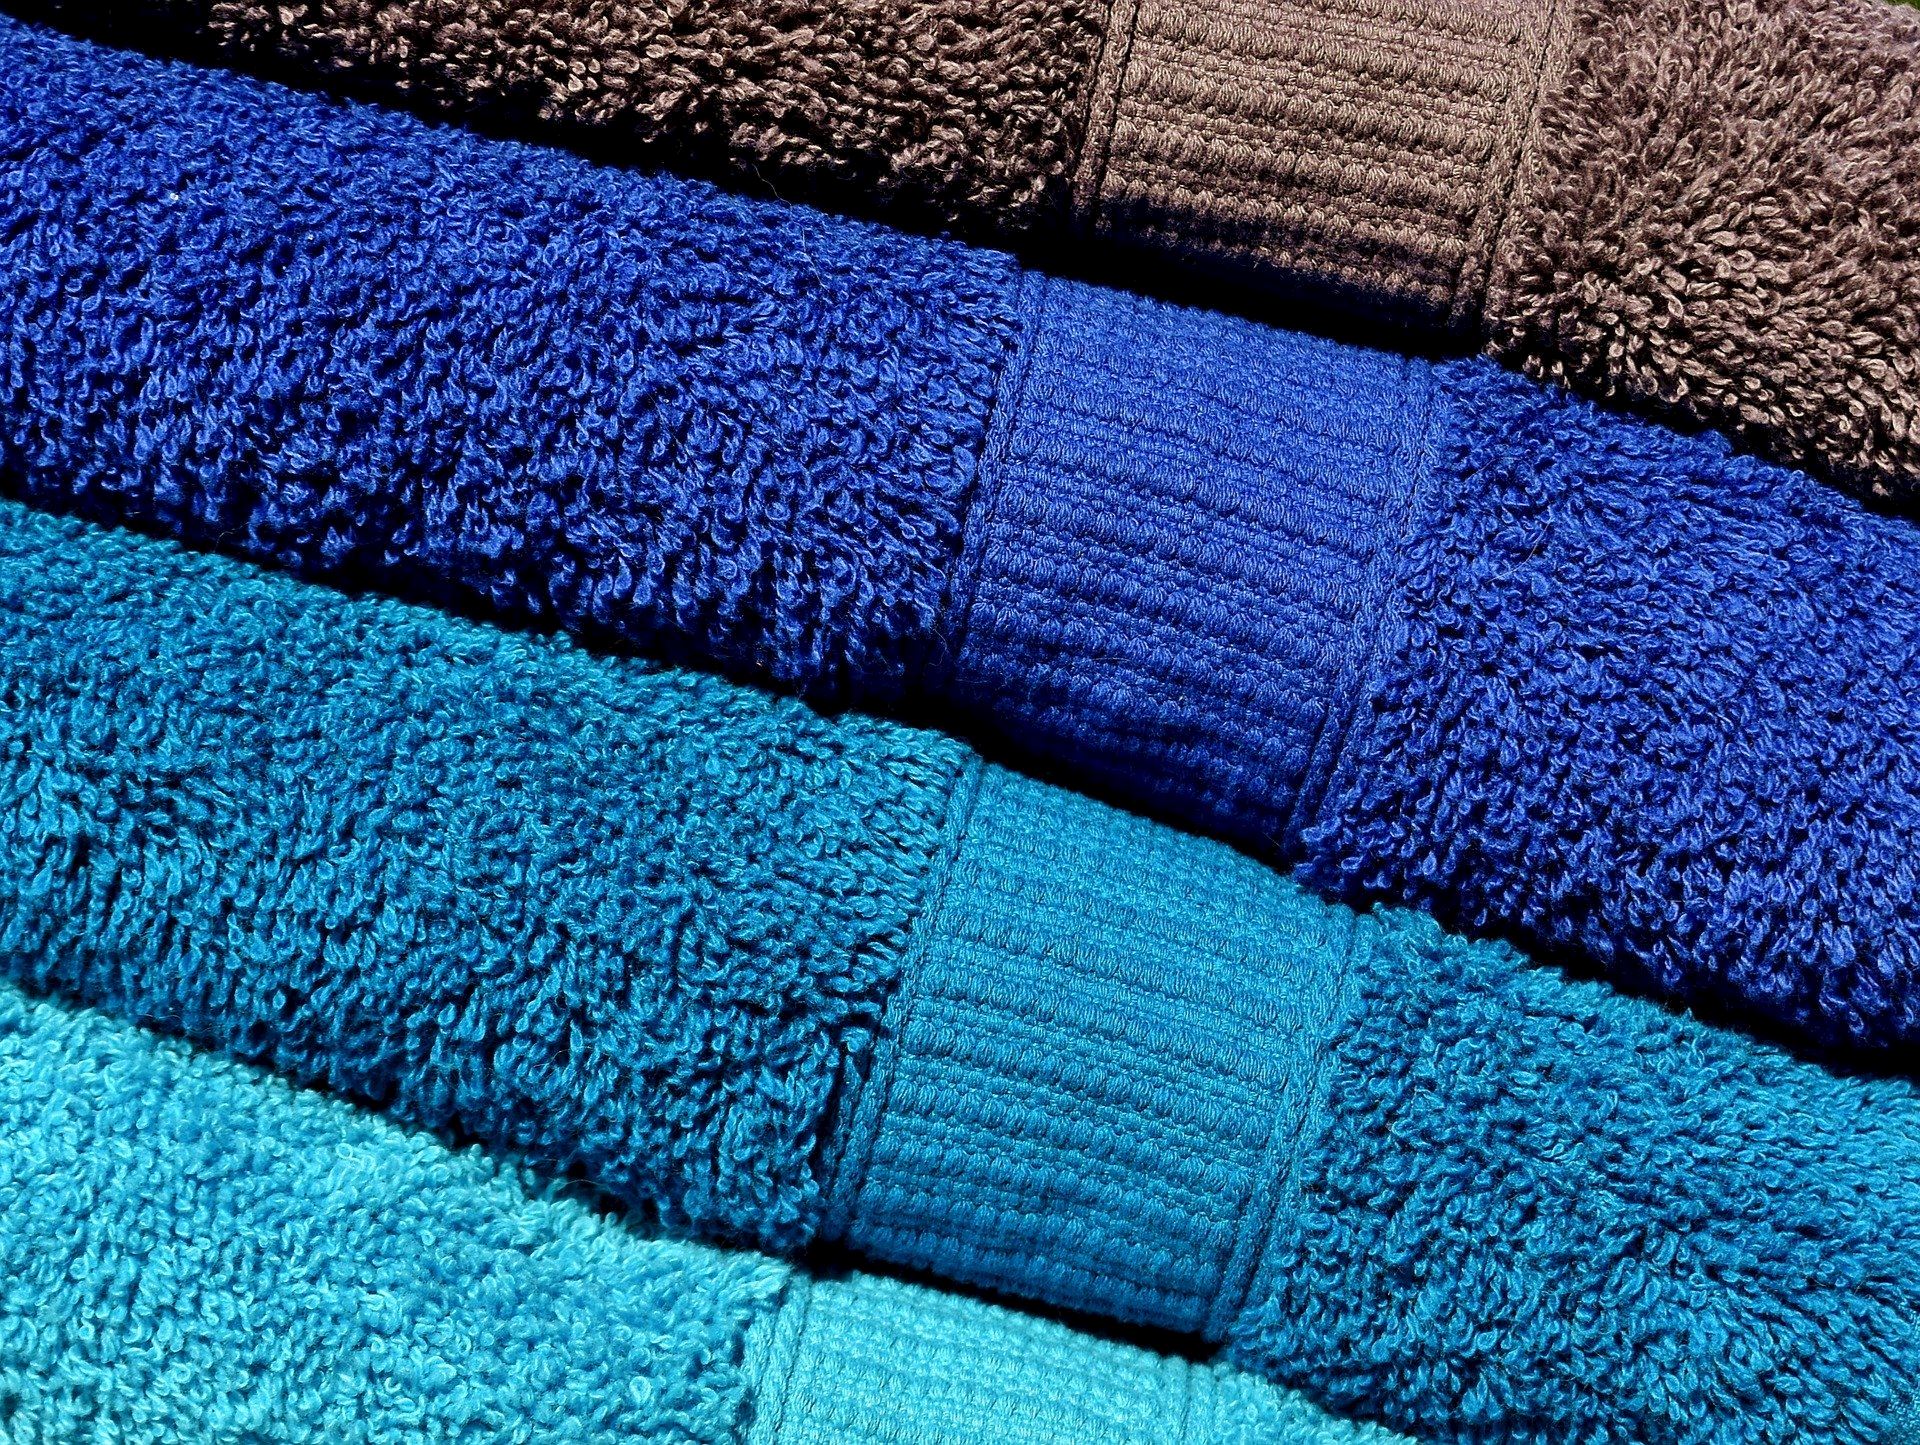 Blue towels